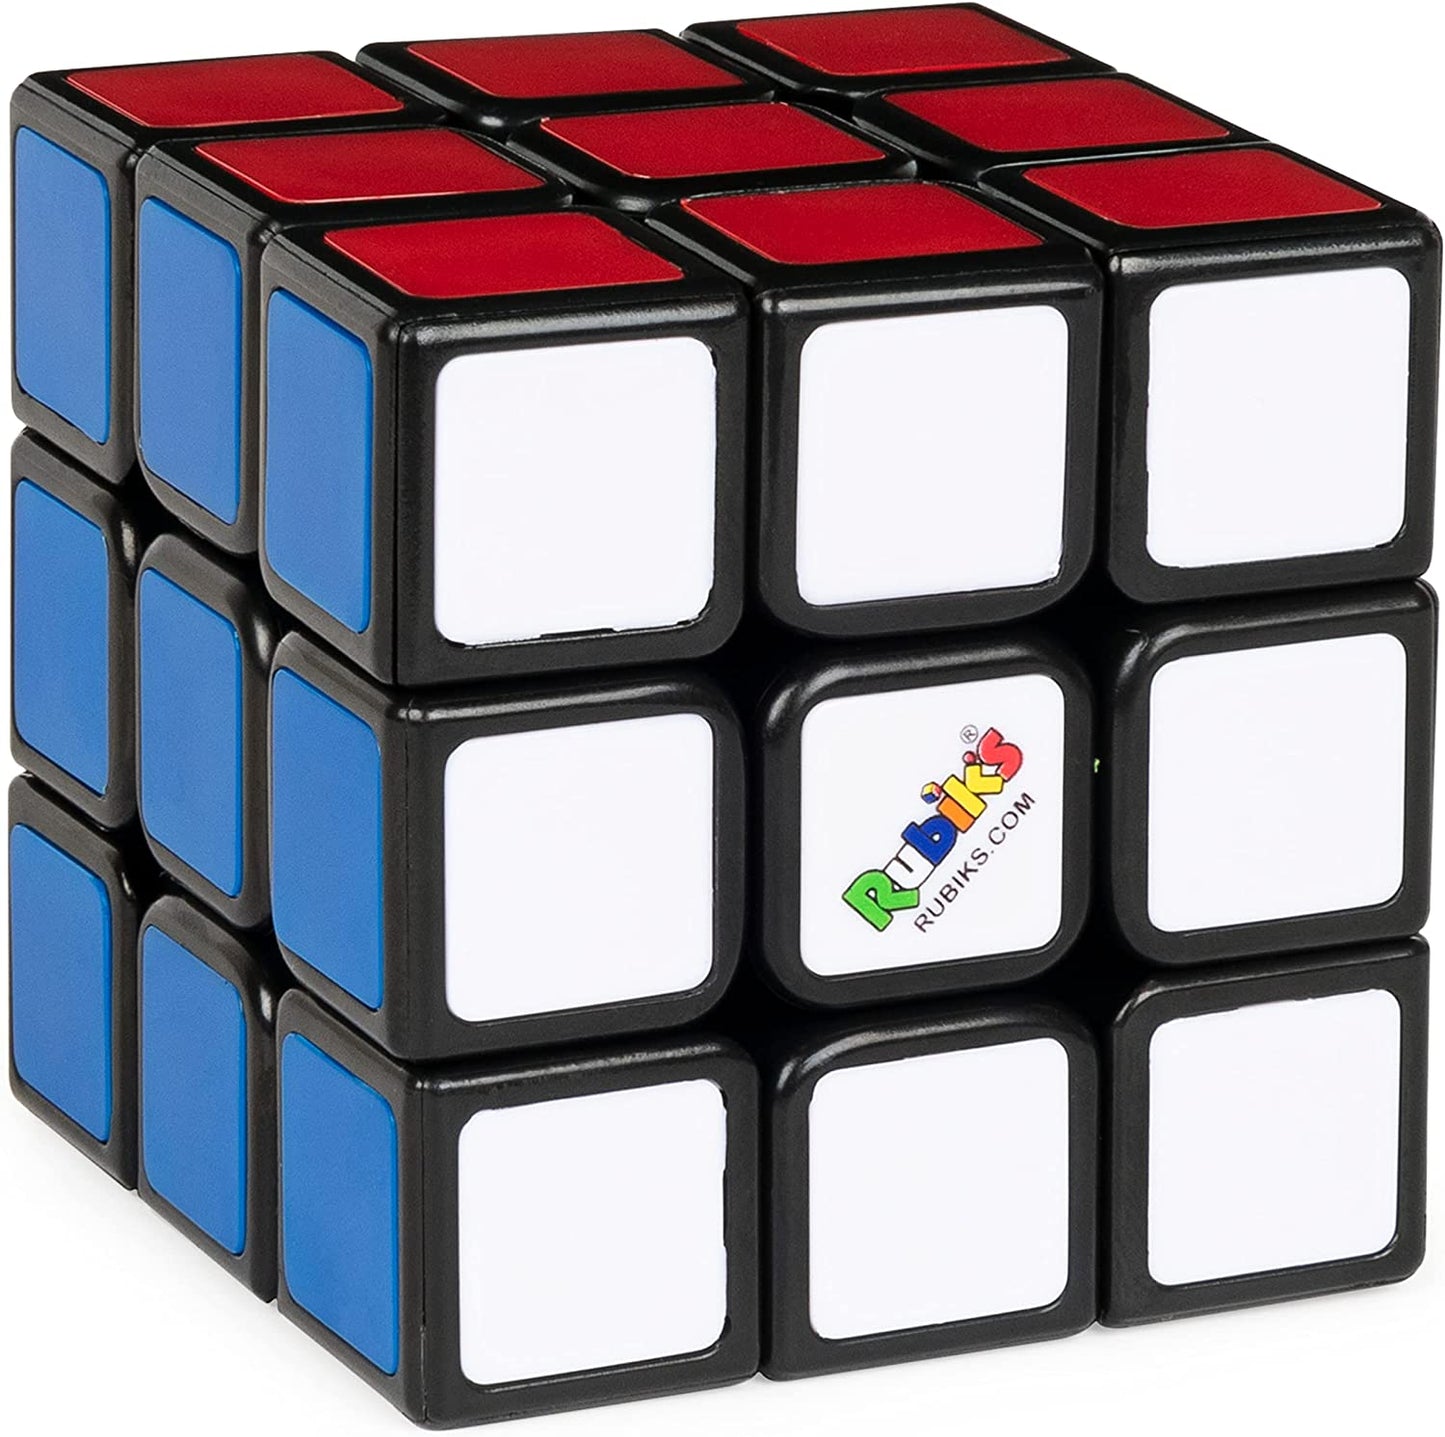 Rubiks 3x3